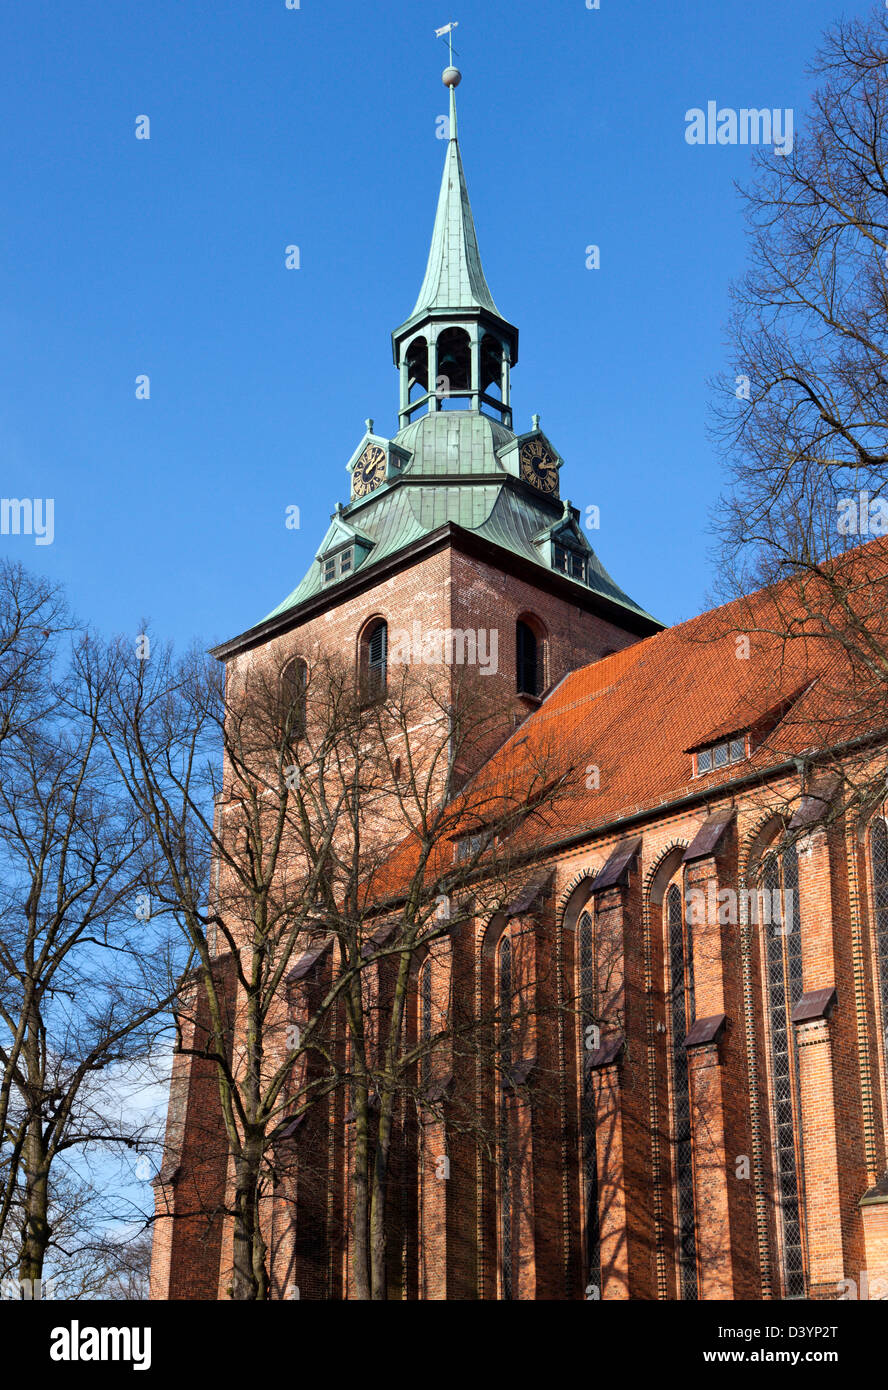 Michaeliskirche Lüneburg - Turm der gotischen Kirche St. Michaelis in Lüneburg Stockfoto